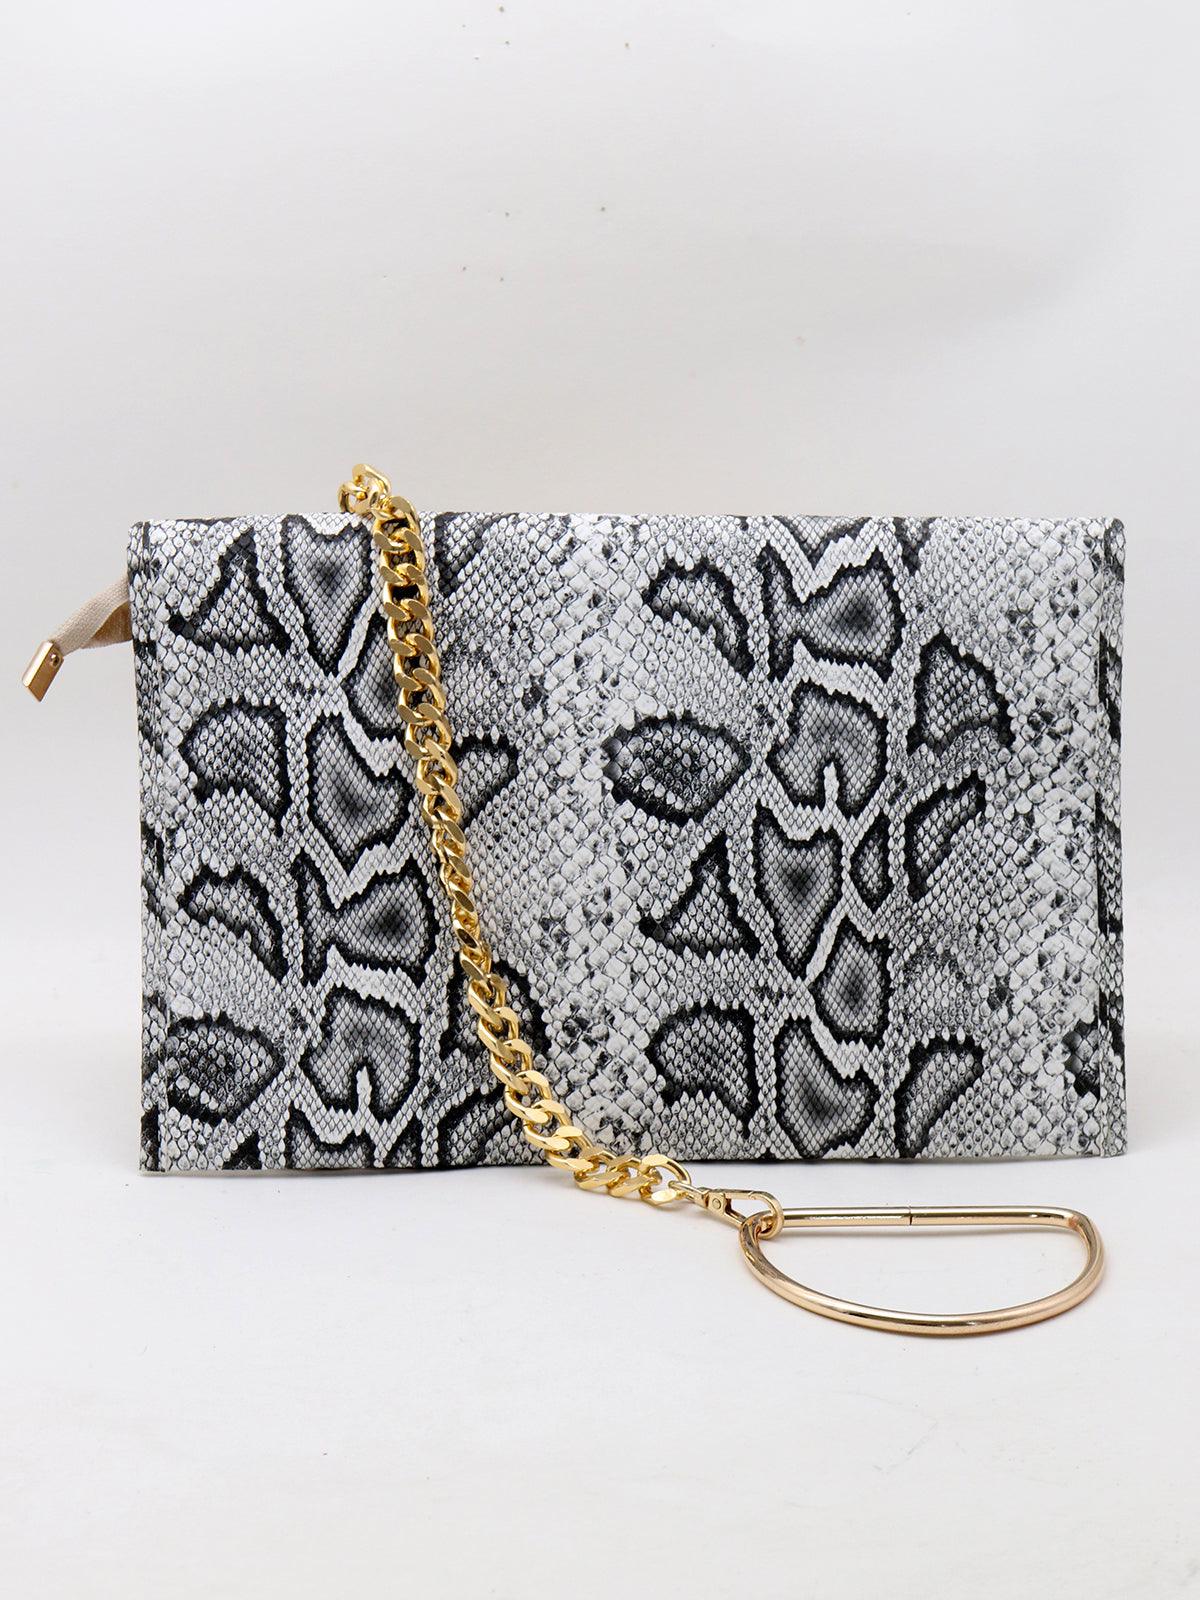 Grey snake skin-like posh handbag! - Odette